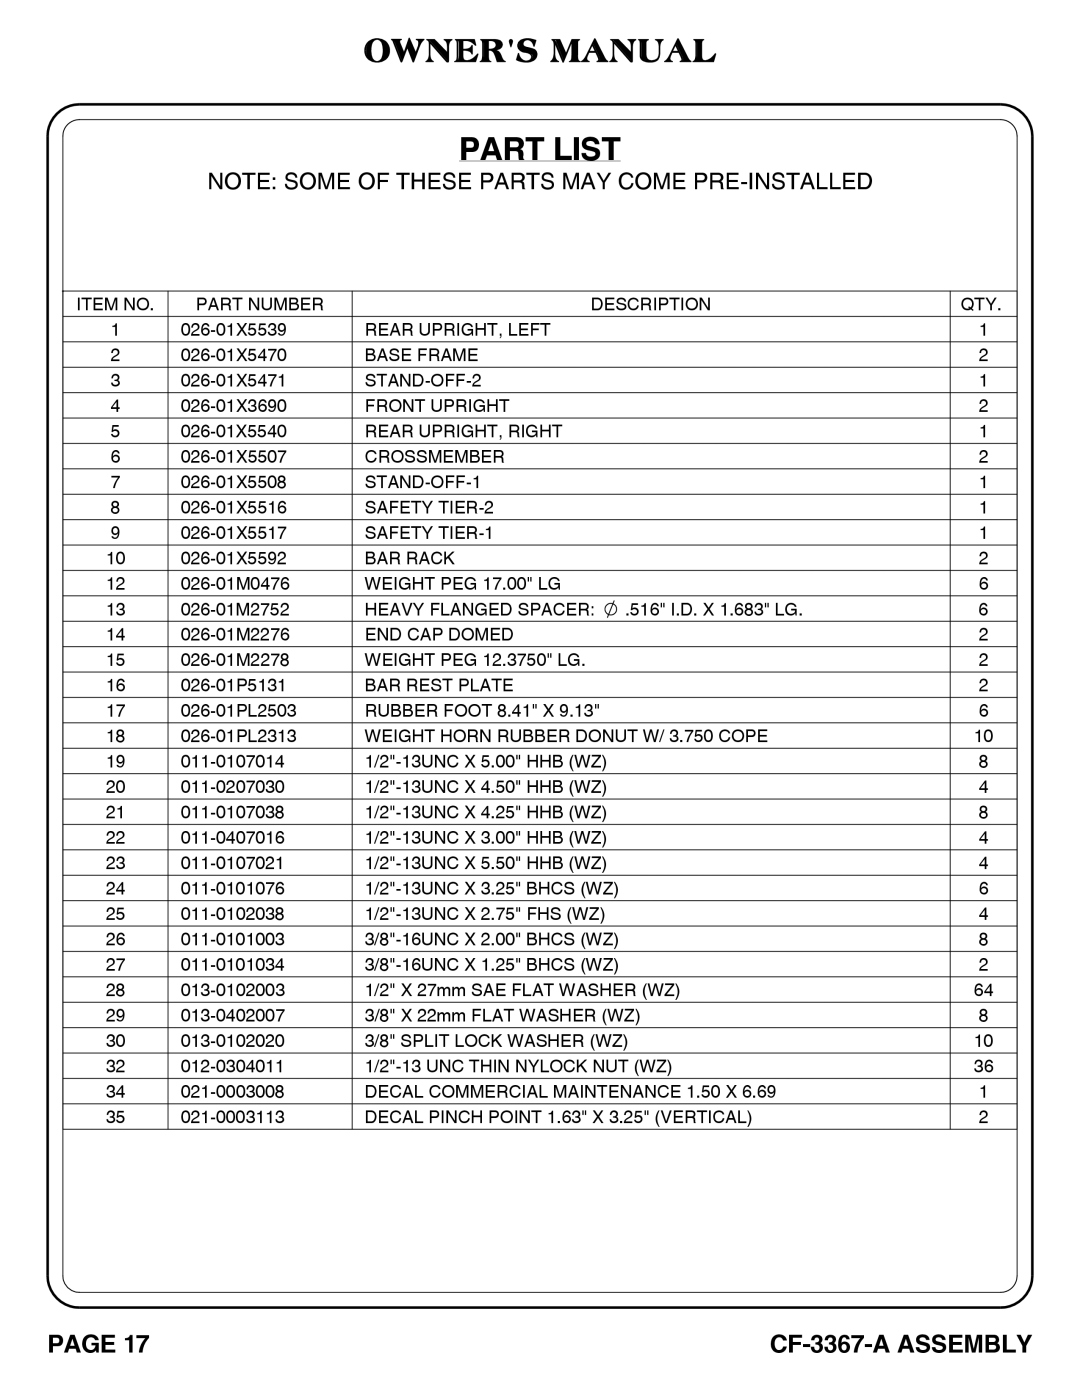 Hoist Fitness CF-3367-A SQUAT RACK owner manual Part List, Weight Horn Rubber Donut W/ 3.750 Cope 